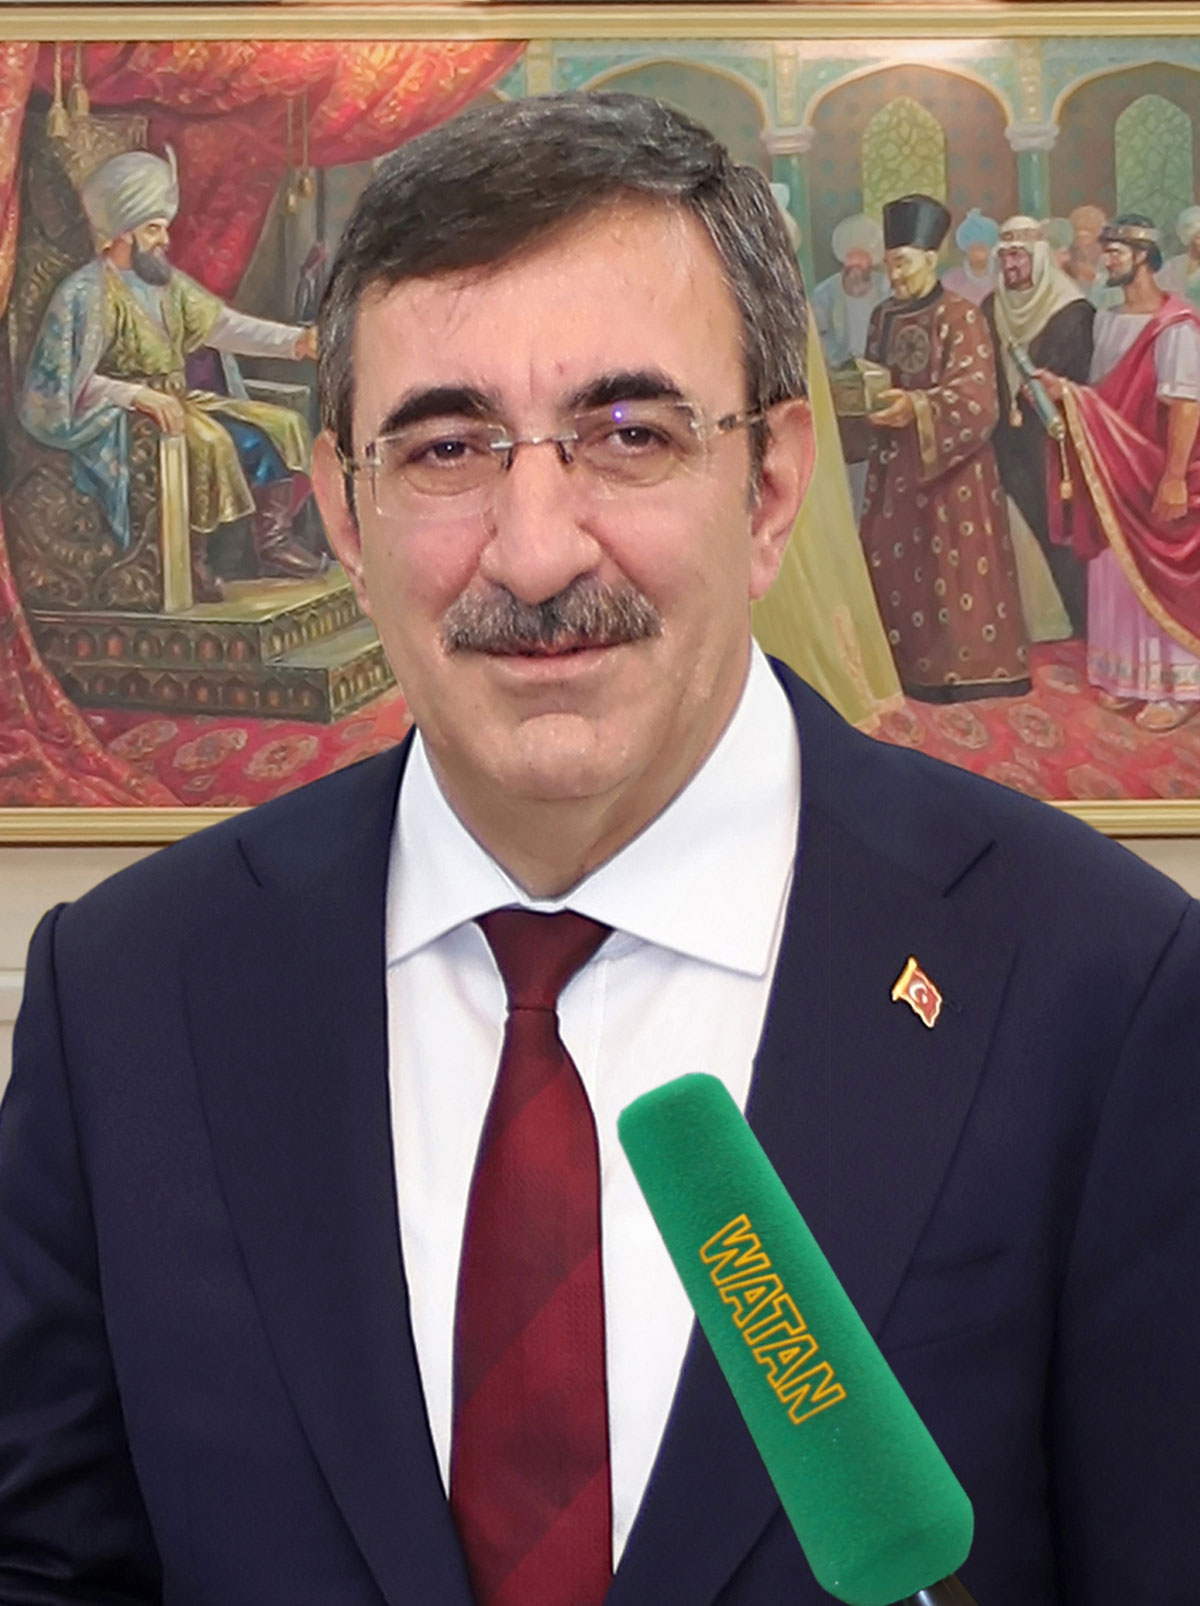 Türkmenistanyň Prezidenti Türkiýe Respublikasynyň wise-prezidentini kabul etdi